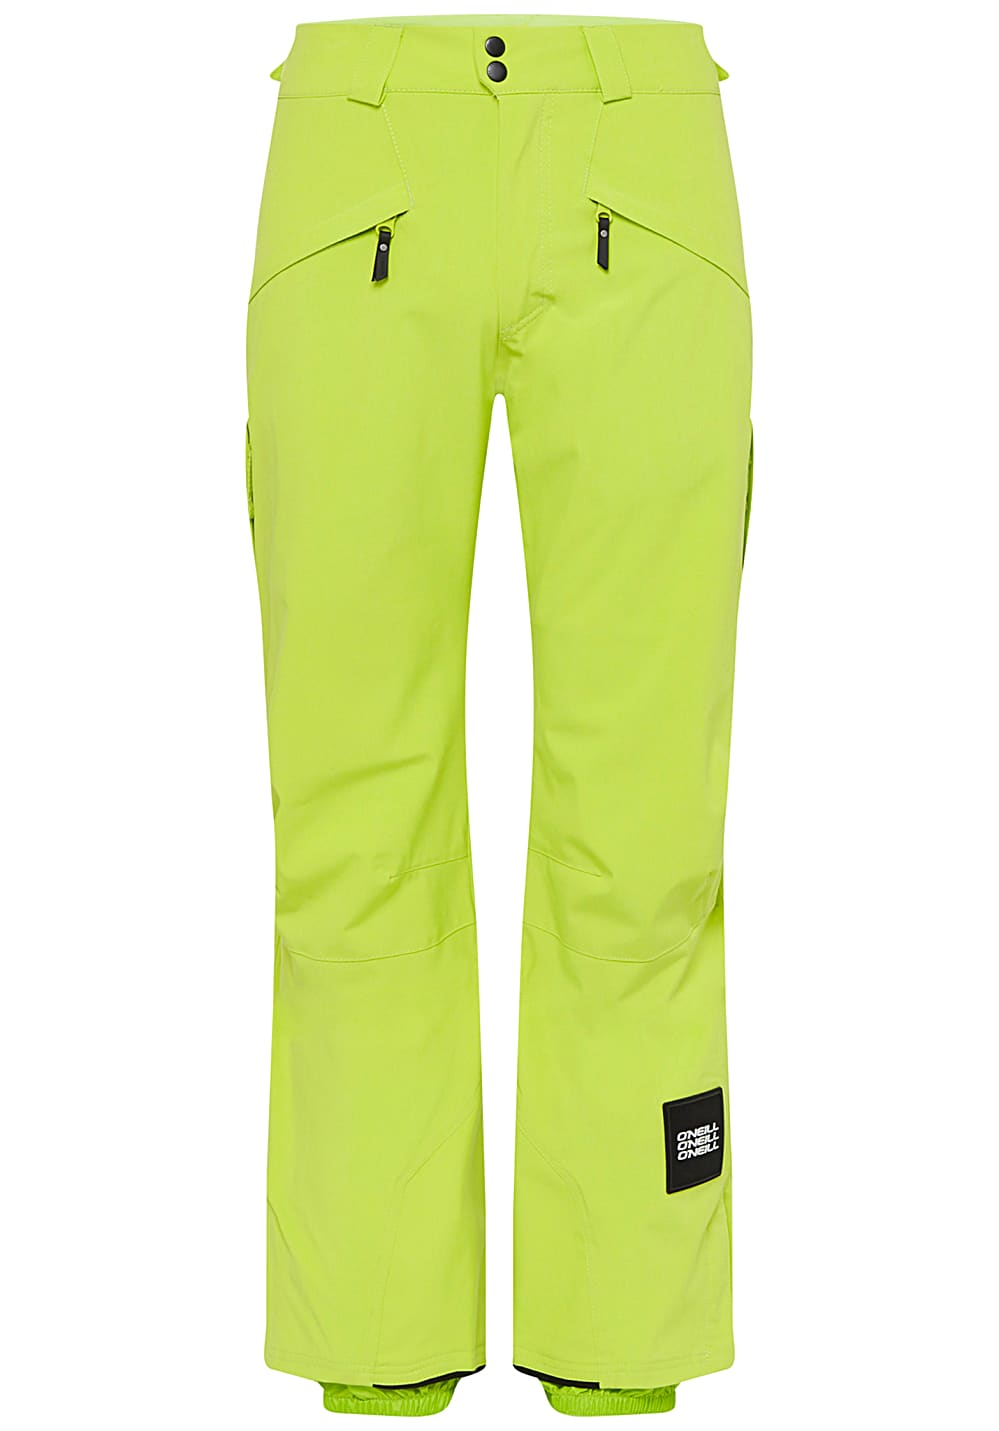 O'Neill kalhoty na snowboard Quartzite Pants Lime Punch Velikost: XL + doprava zdarma